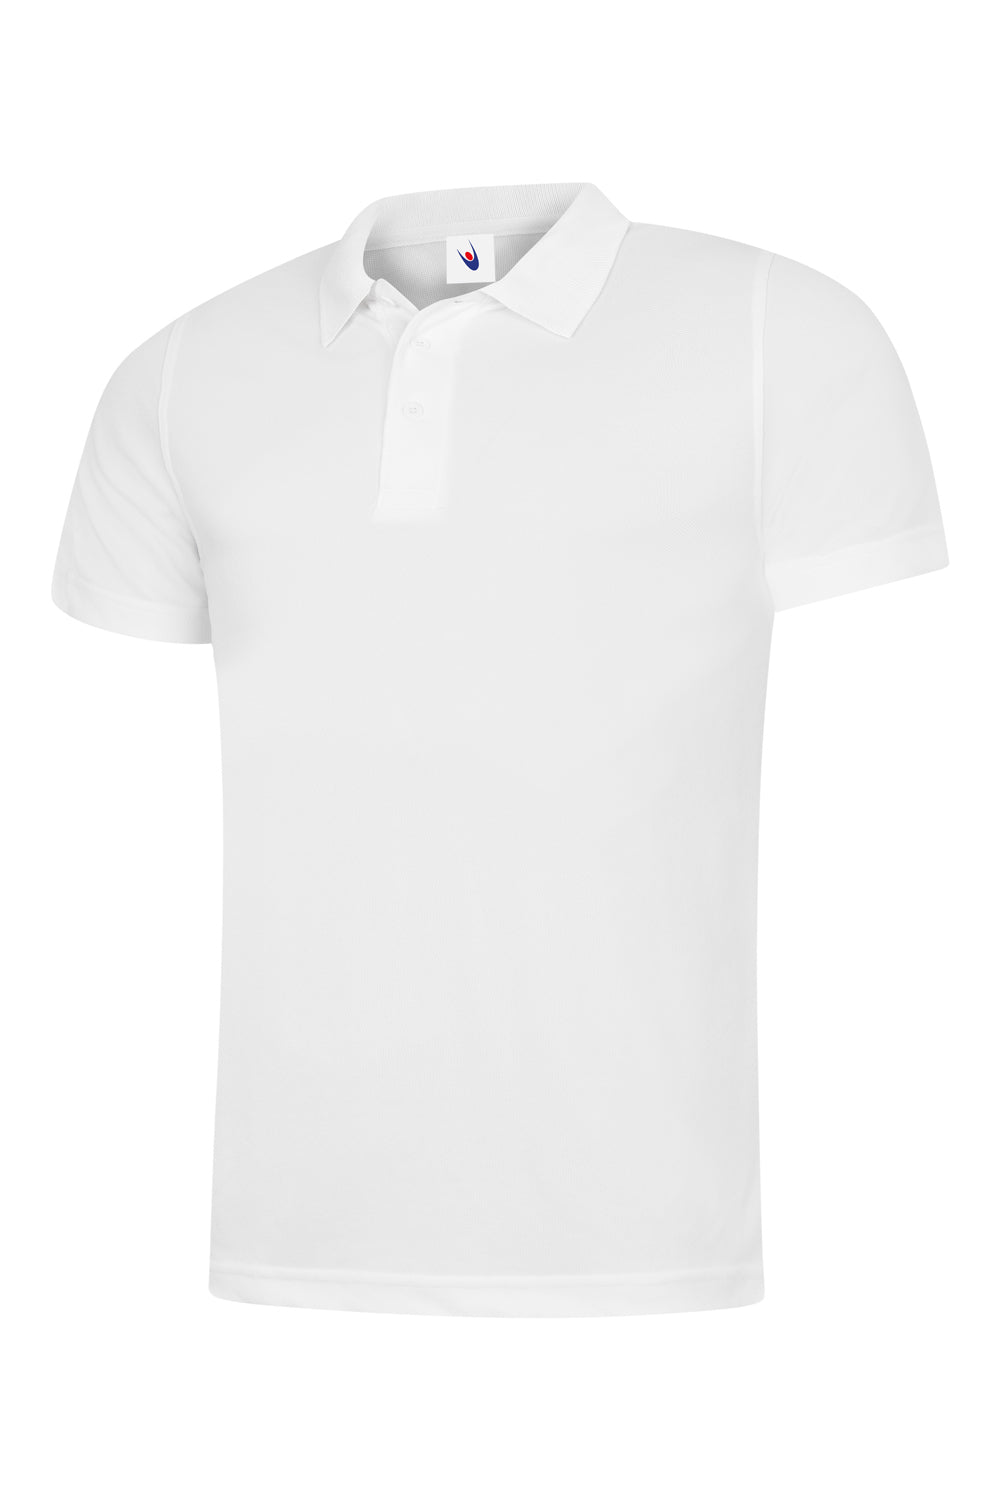 mens_super_cool_workwear_polo_shirt_white